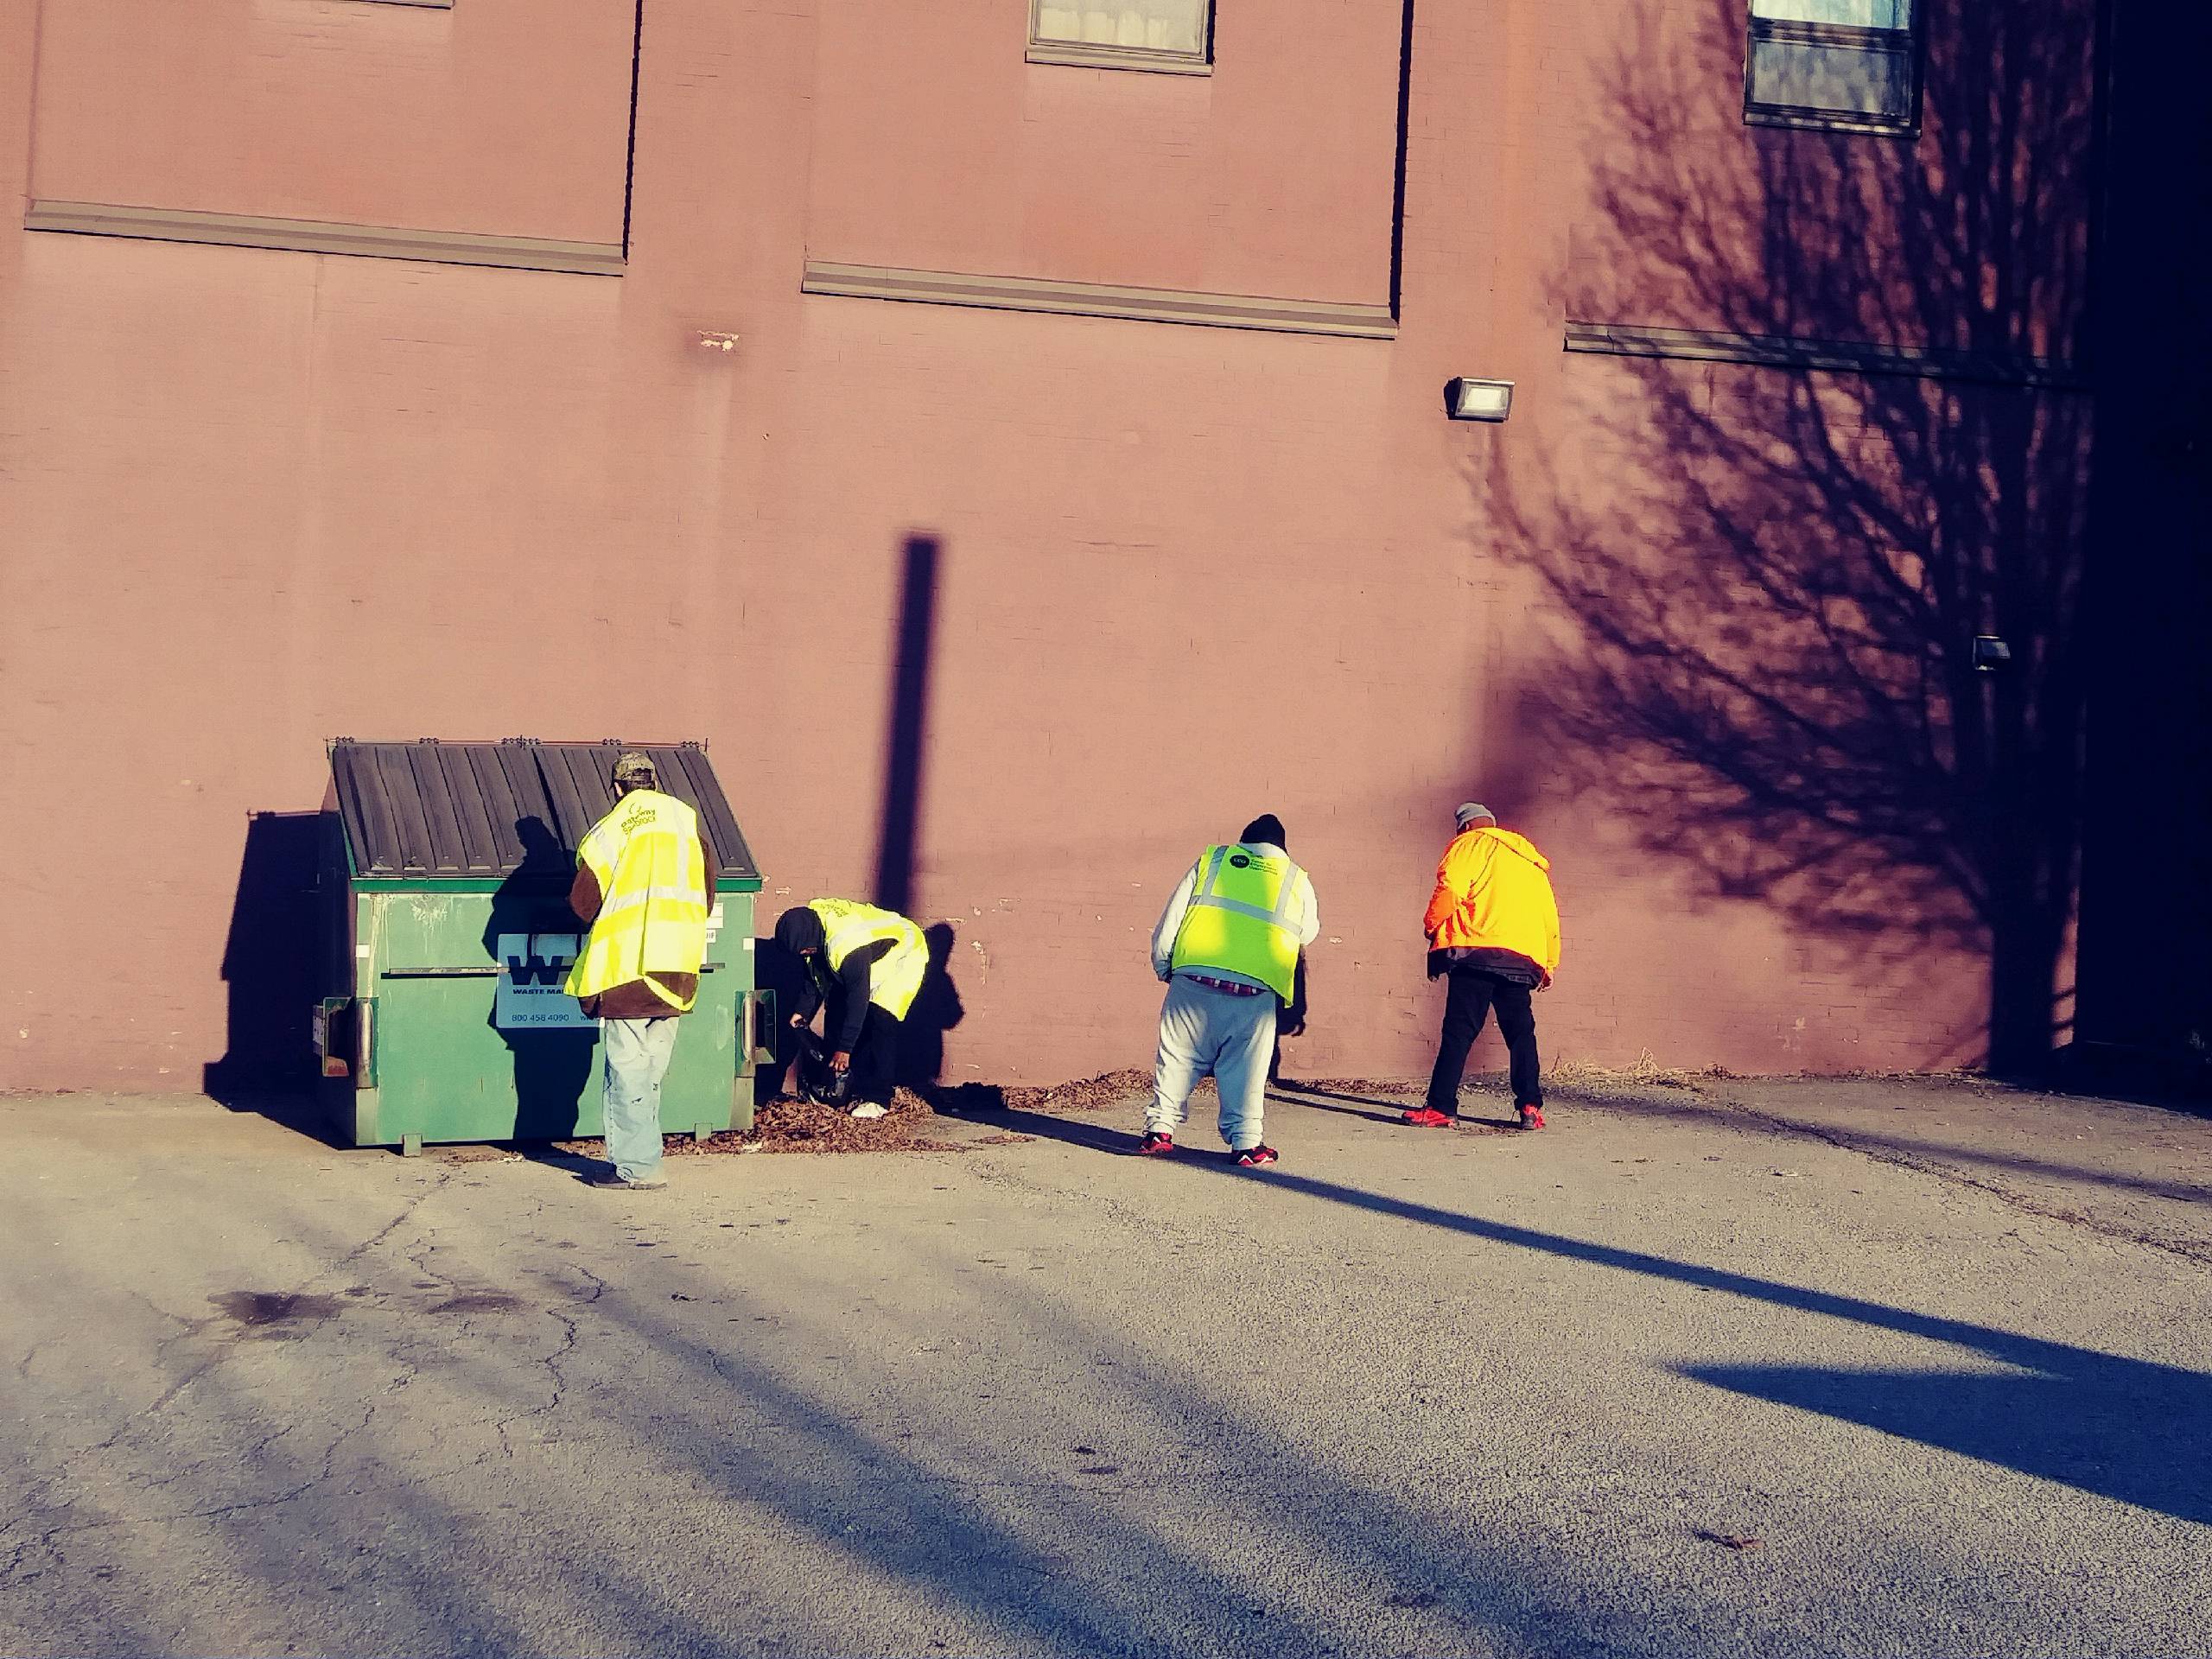 Reentrants pick up trash